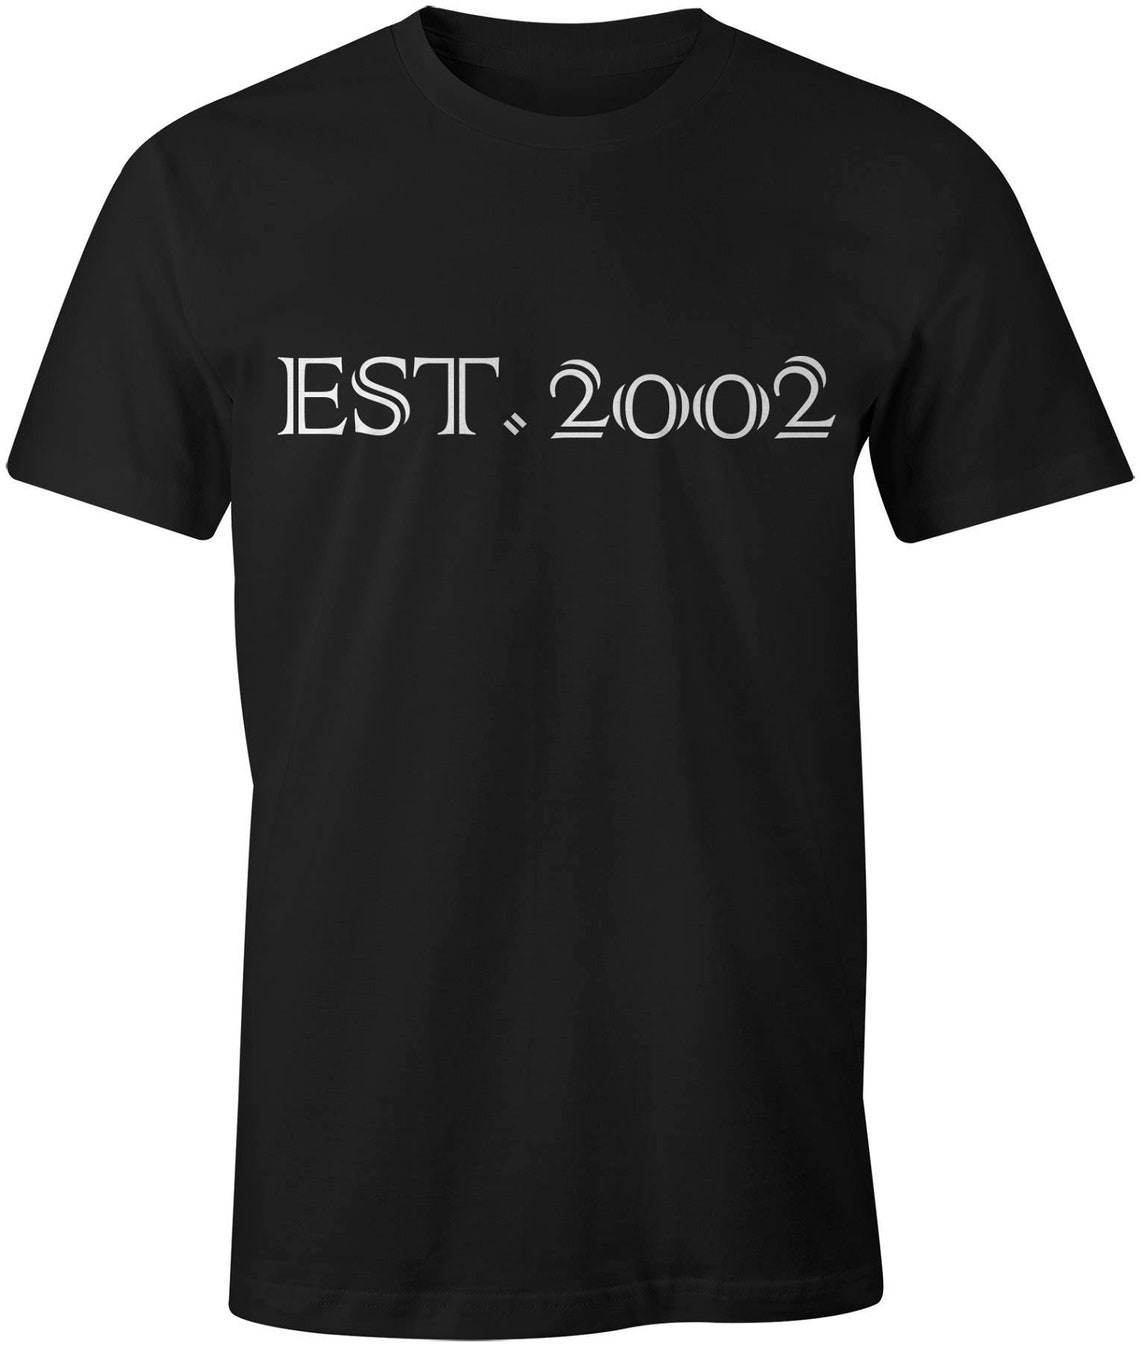 2002 Shirt Established 2002 T-Shirt Est 2002 18th | Etsy